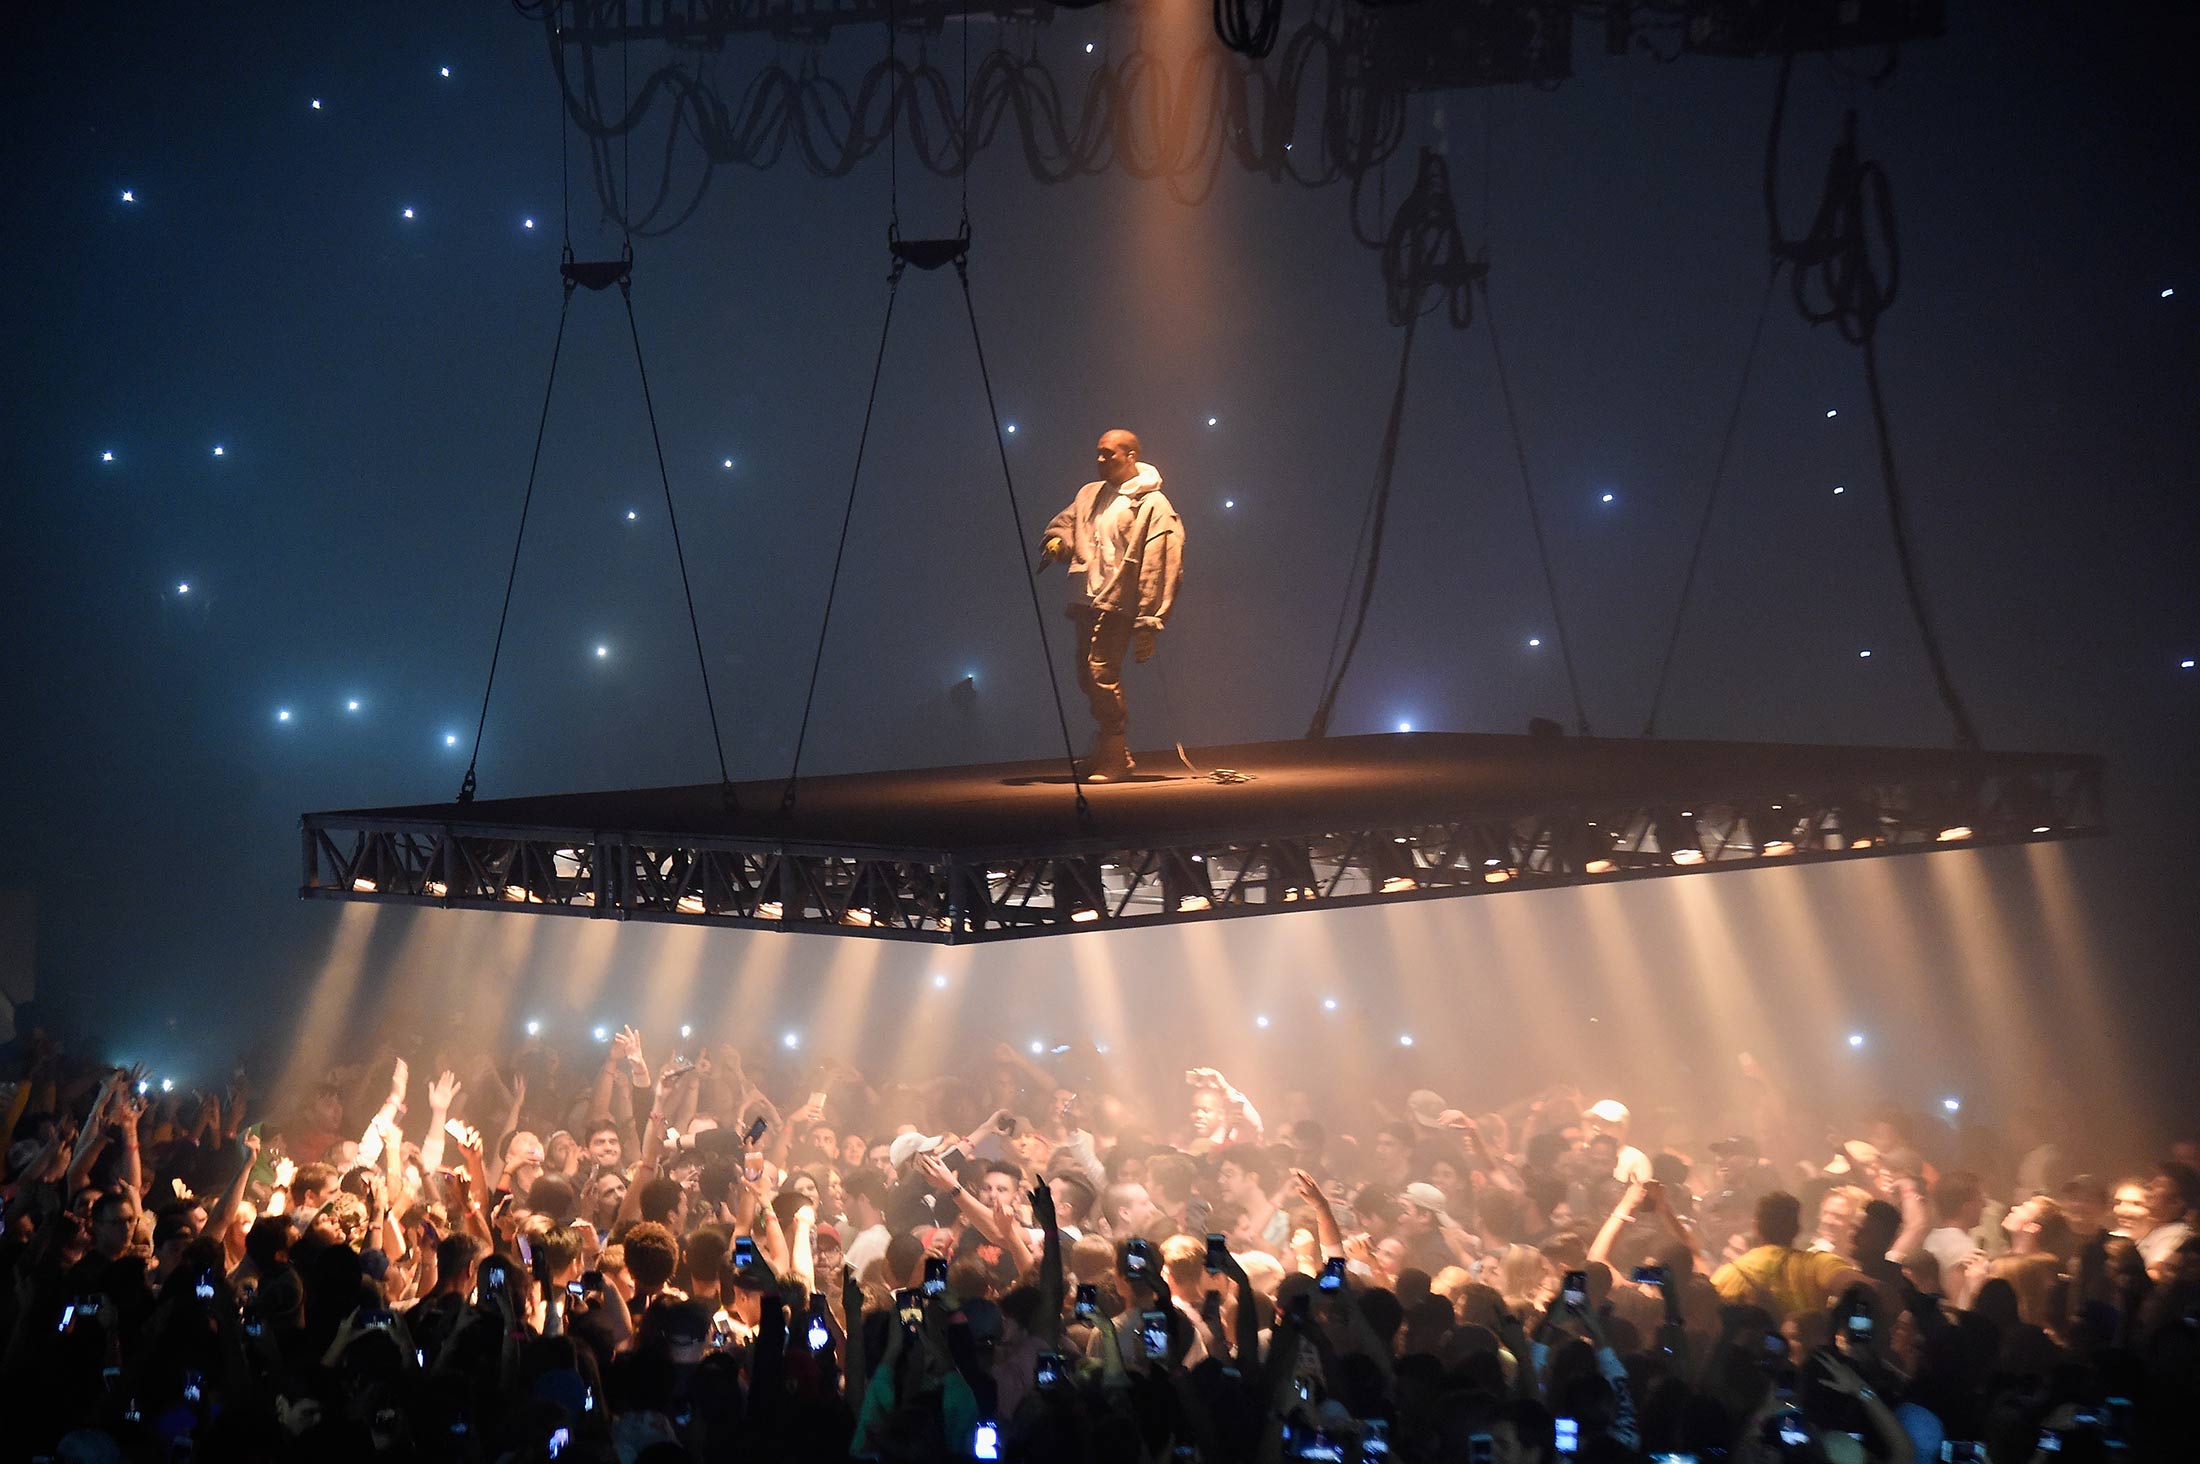 W performance. Канье Уэст на подвесной сцене. Kanye West концерт. Концерт Канье Вкста. Kanye West выступление на сцене.